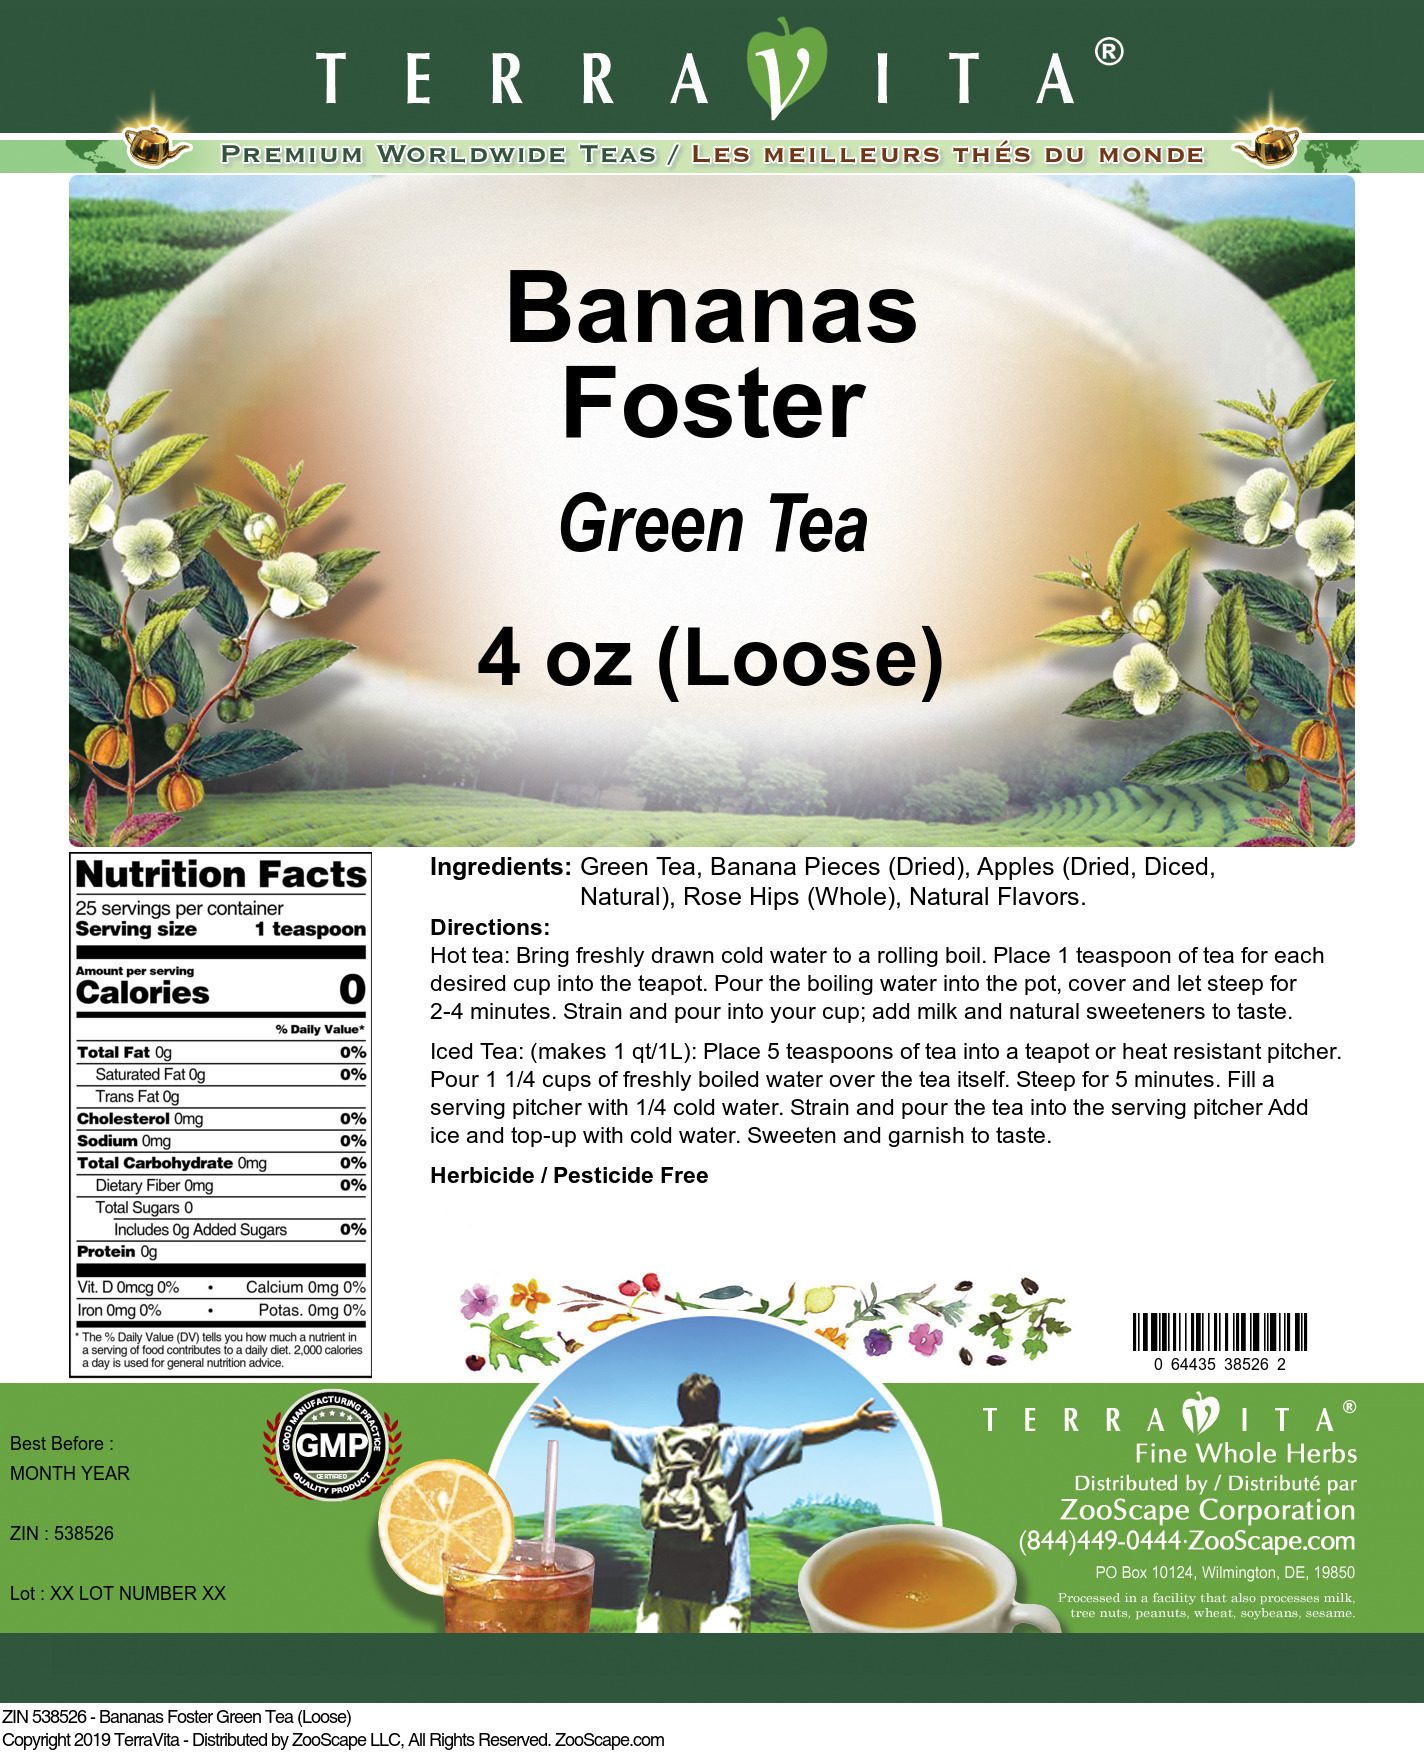 Bananas Foster Green Tea (Loose) - Label